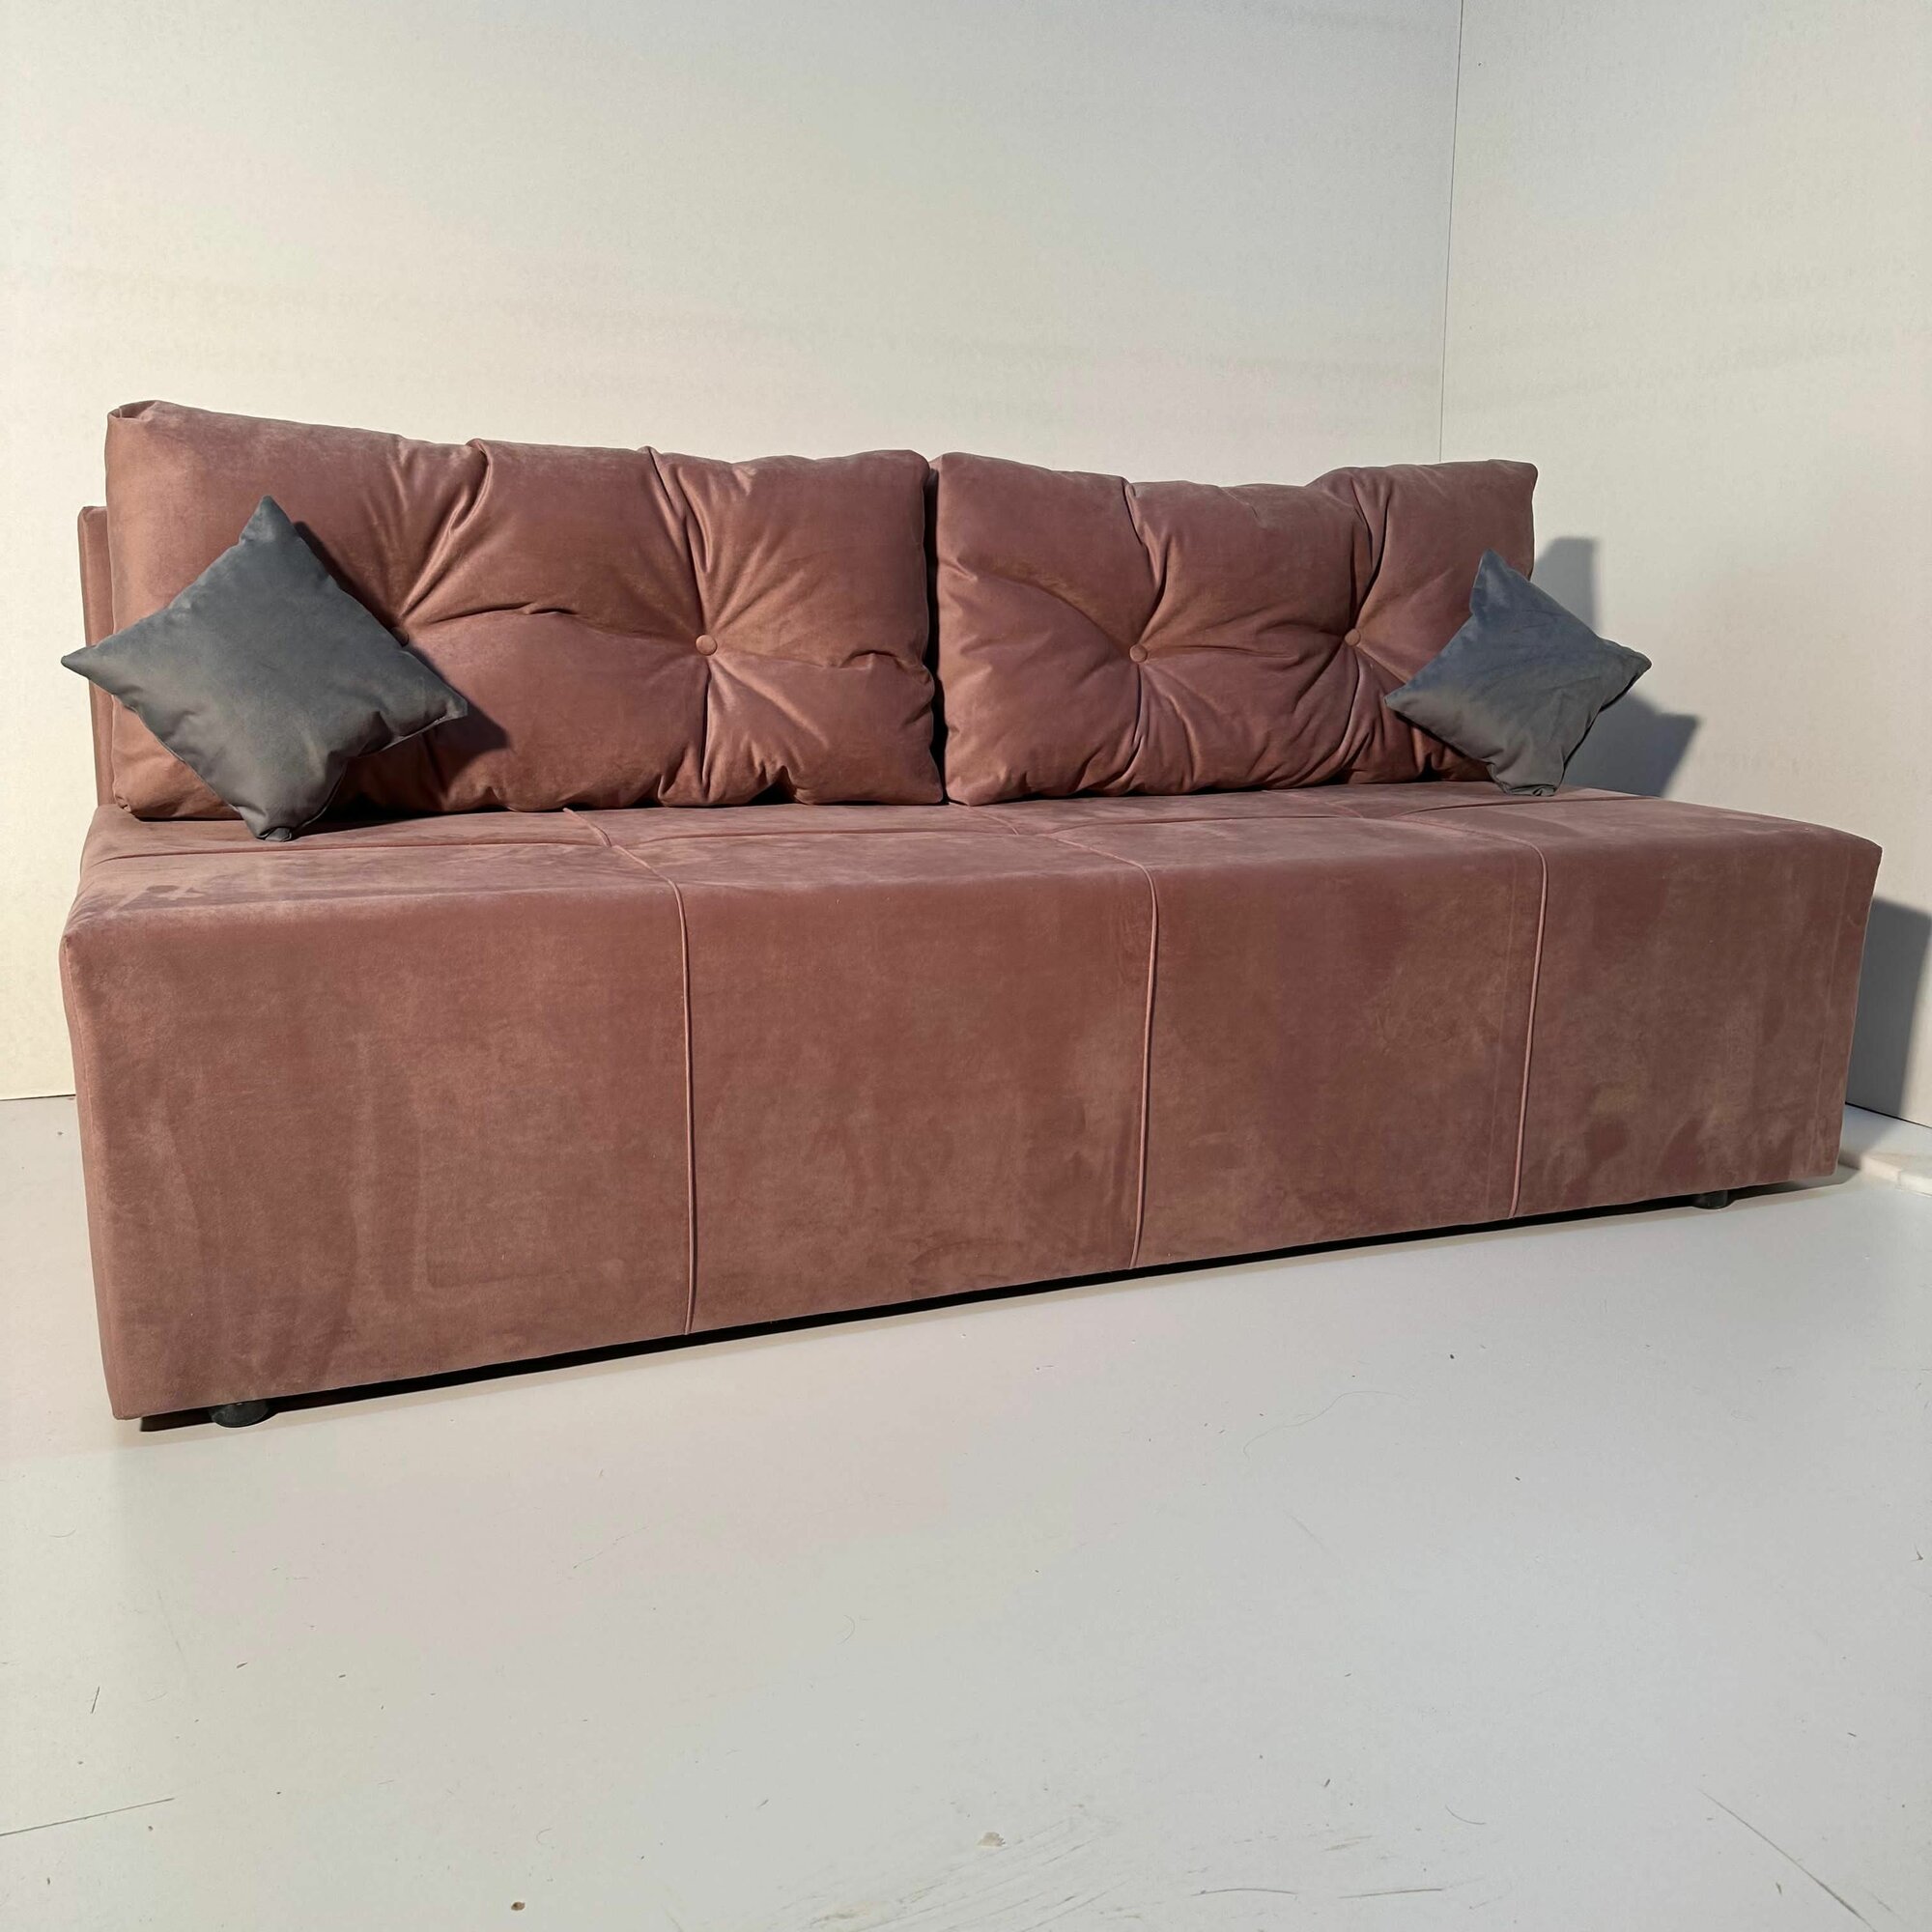 Диван-кровать "Азета-10" с утяжками, без локтей 188 х 78 х 90 розовый велюр еврокнижка